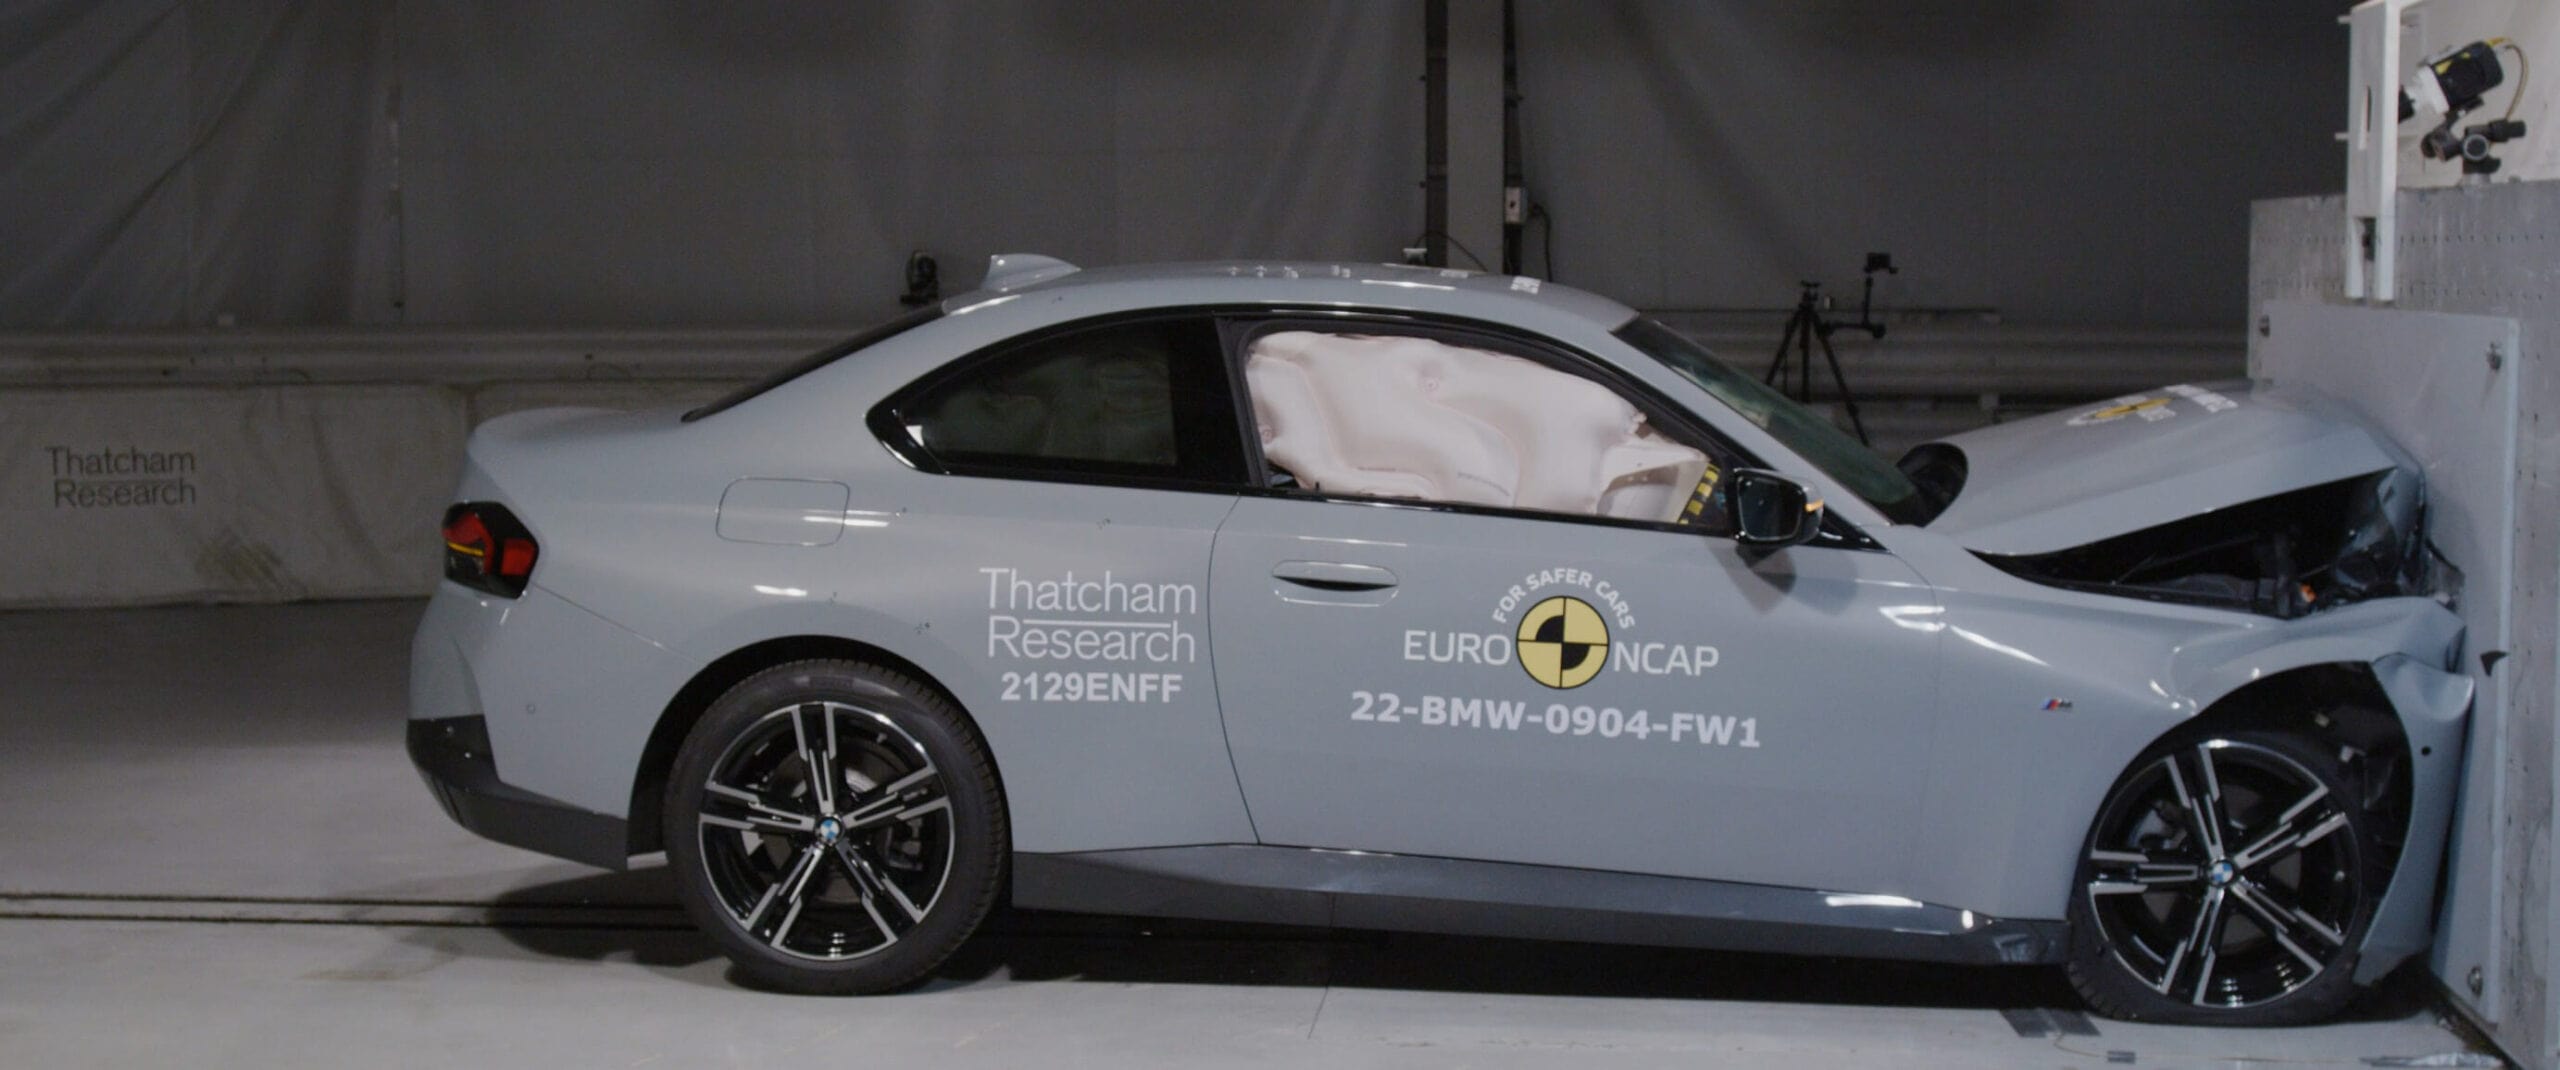 2022 BMW 2 Series Coupe Euro NCAP Crash Test 1 scaled